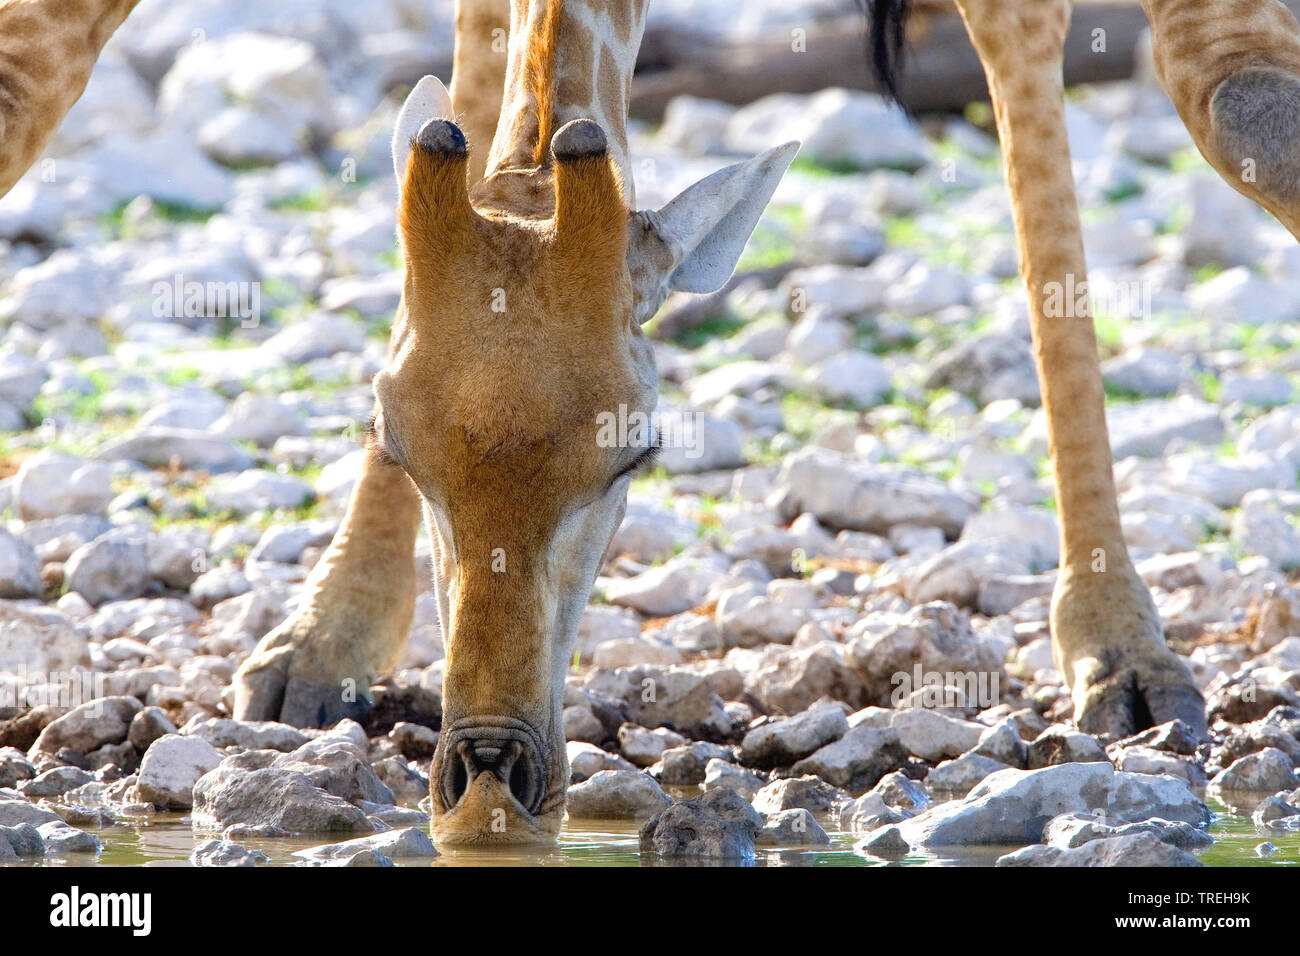 Angolan giraffe, Smoky giraffe (Giraffa camelopardalis angolensis), portrait, drinking, Namibia Stock Photo